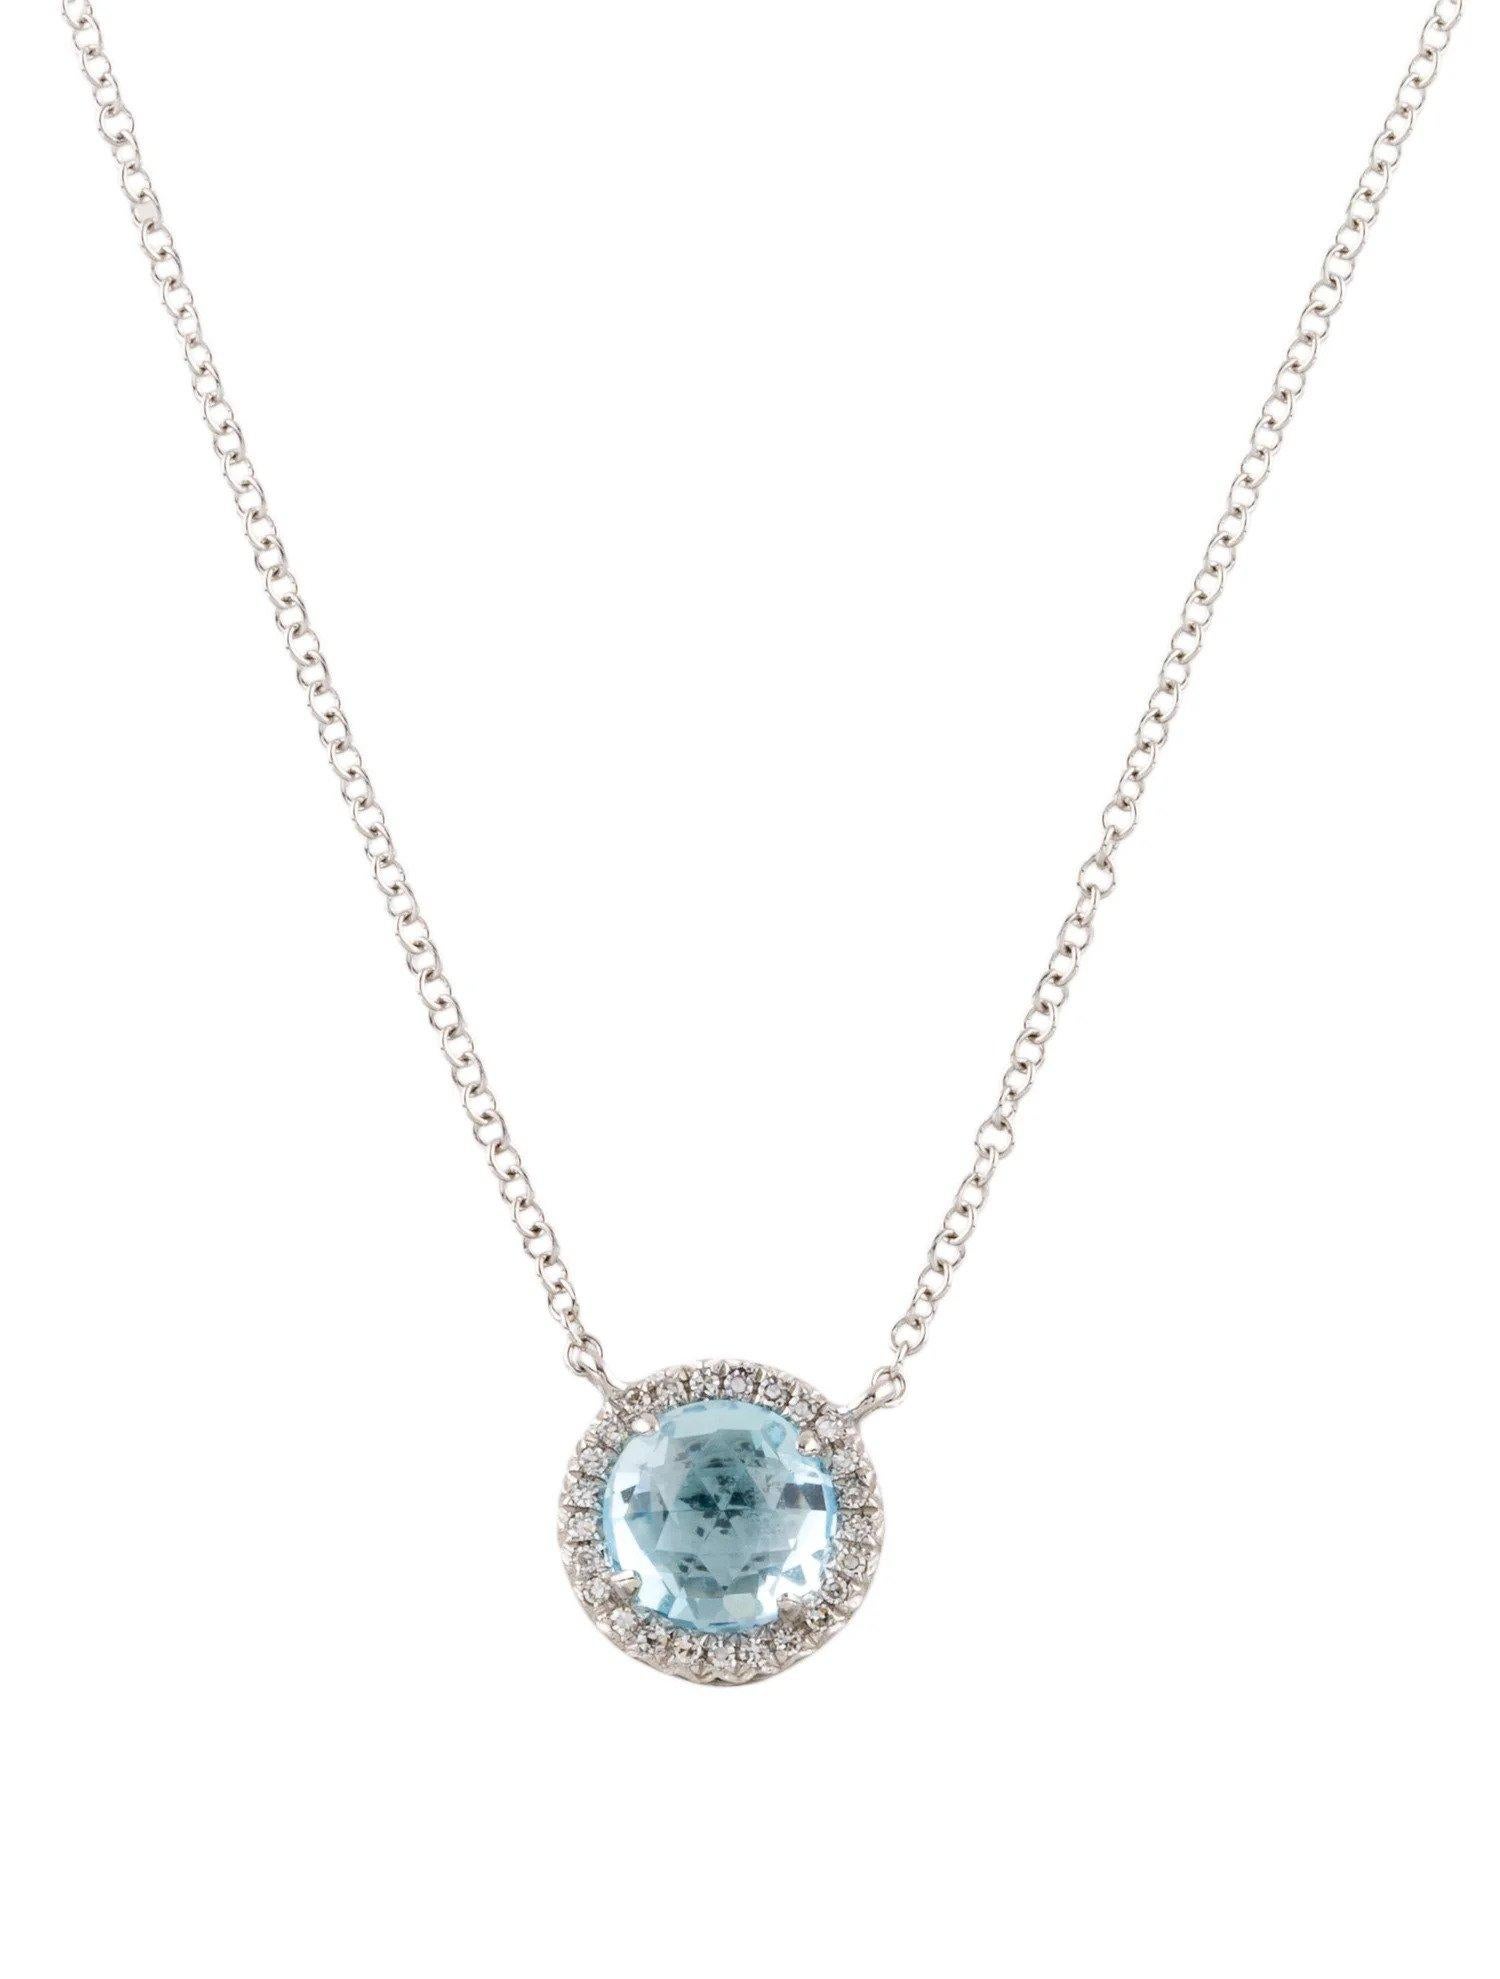 Round Cut 1.41 Carat Round Blue Topaz & Diamond White Gold Pendant Necklace  For Sale